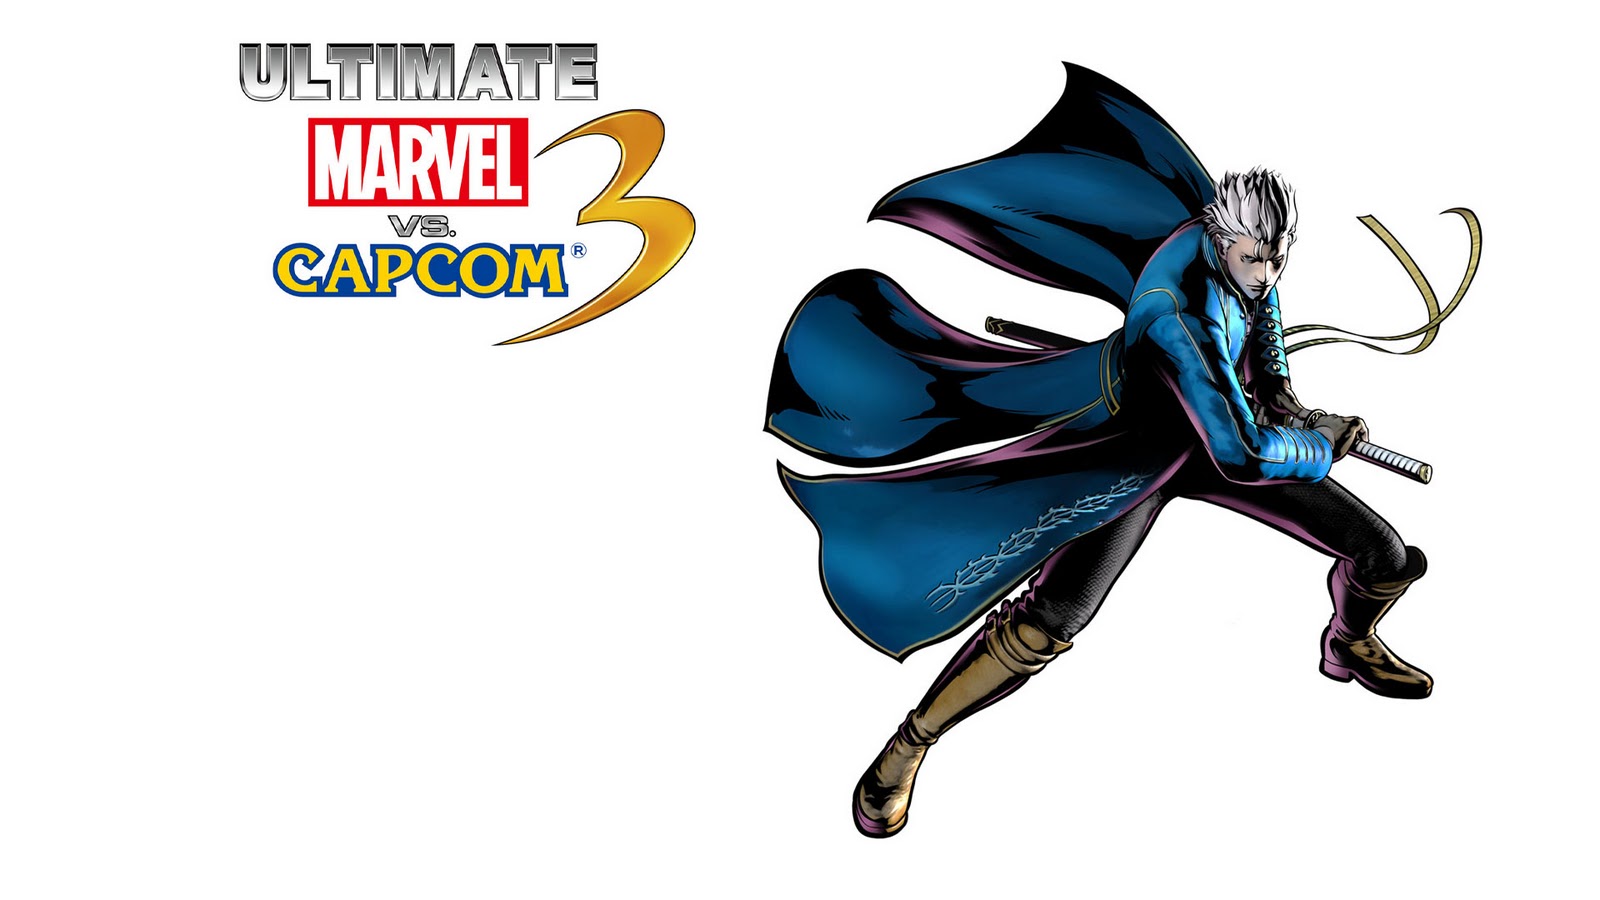 ... Anime: Ultimate Marvel Vs Capcom 3 - Vergil and New Character Pics